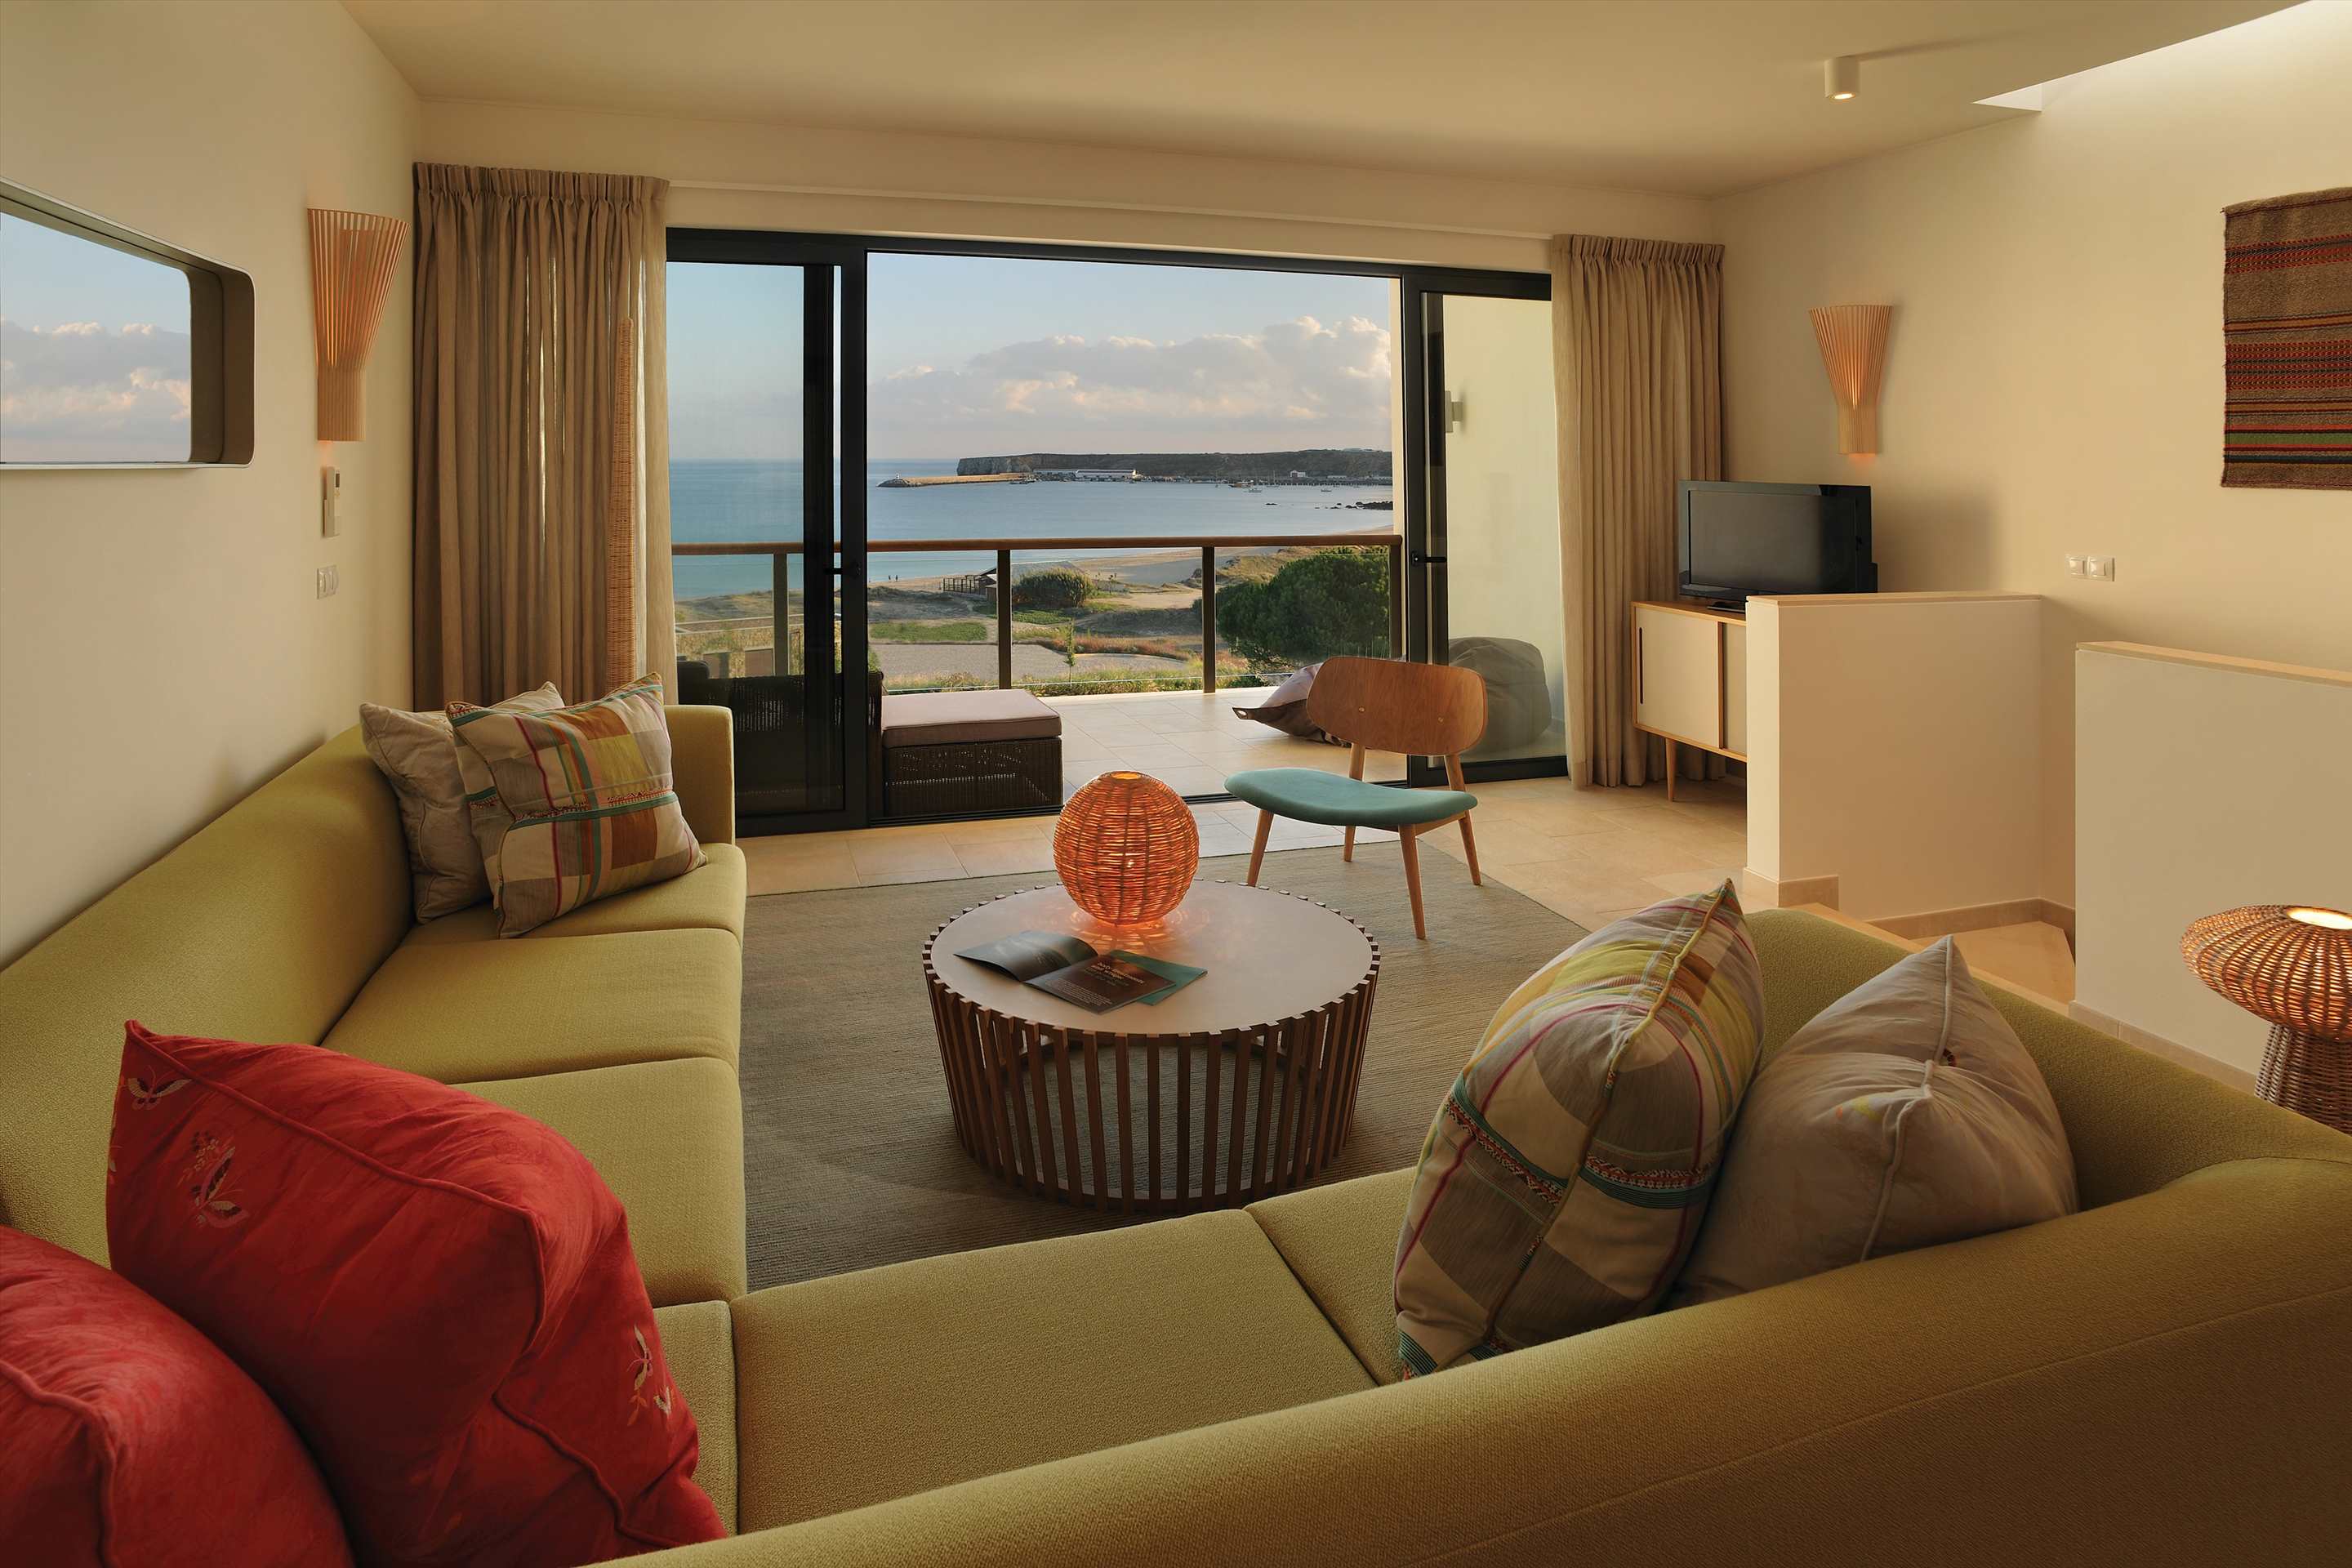 Martinhal Village Ocean House, full ocean view, Master Deluxe Three Bedroom, 3 bedroom villa in Martinhal Sagres, Algarve Photo #1